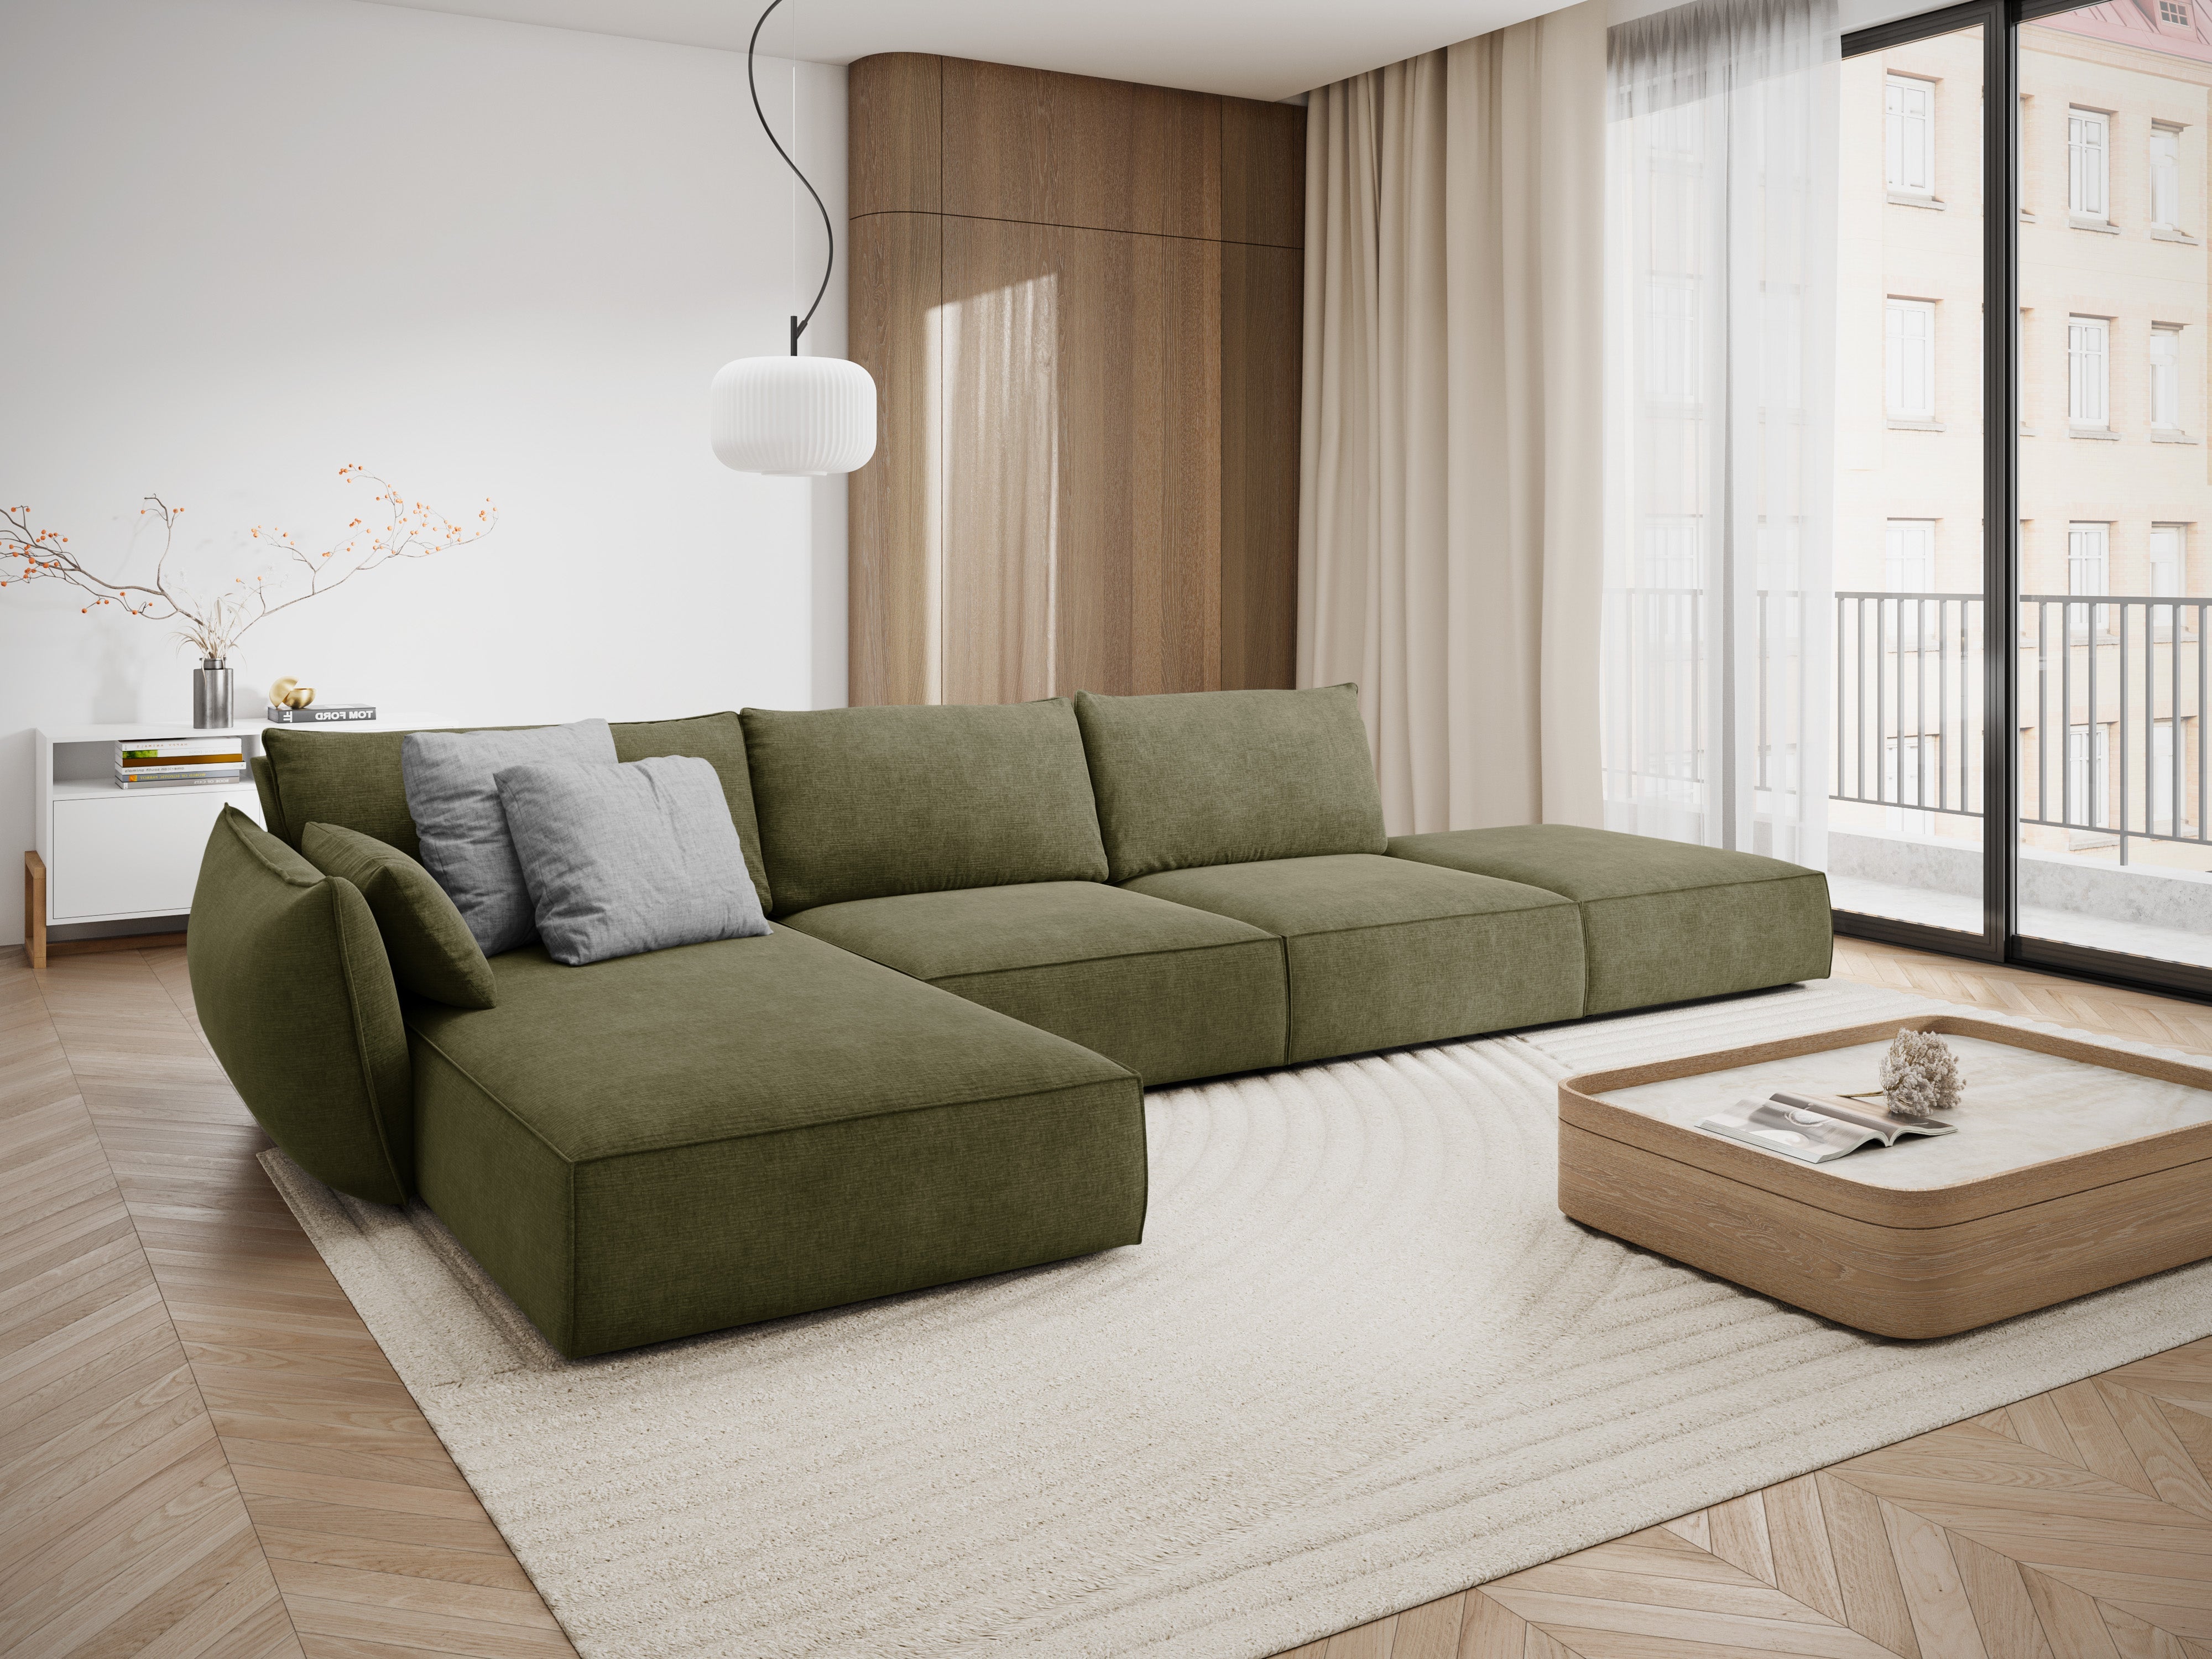 Left Corner Sofa, "Vanda", 5 Seats, 386x166x85
Made in Europe, Mazzini Sofas, Eye on Design